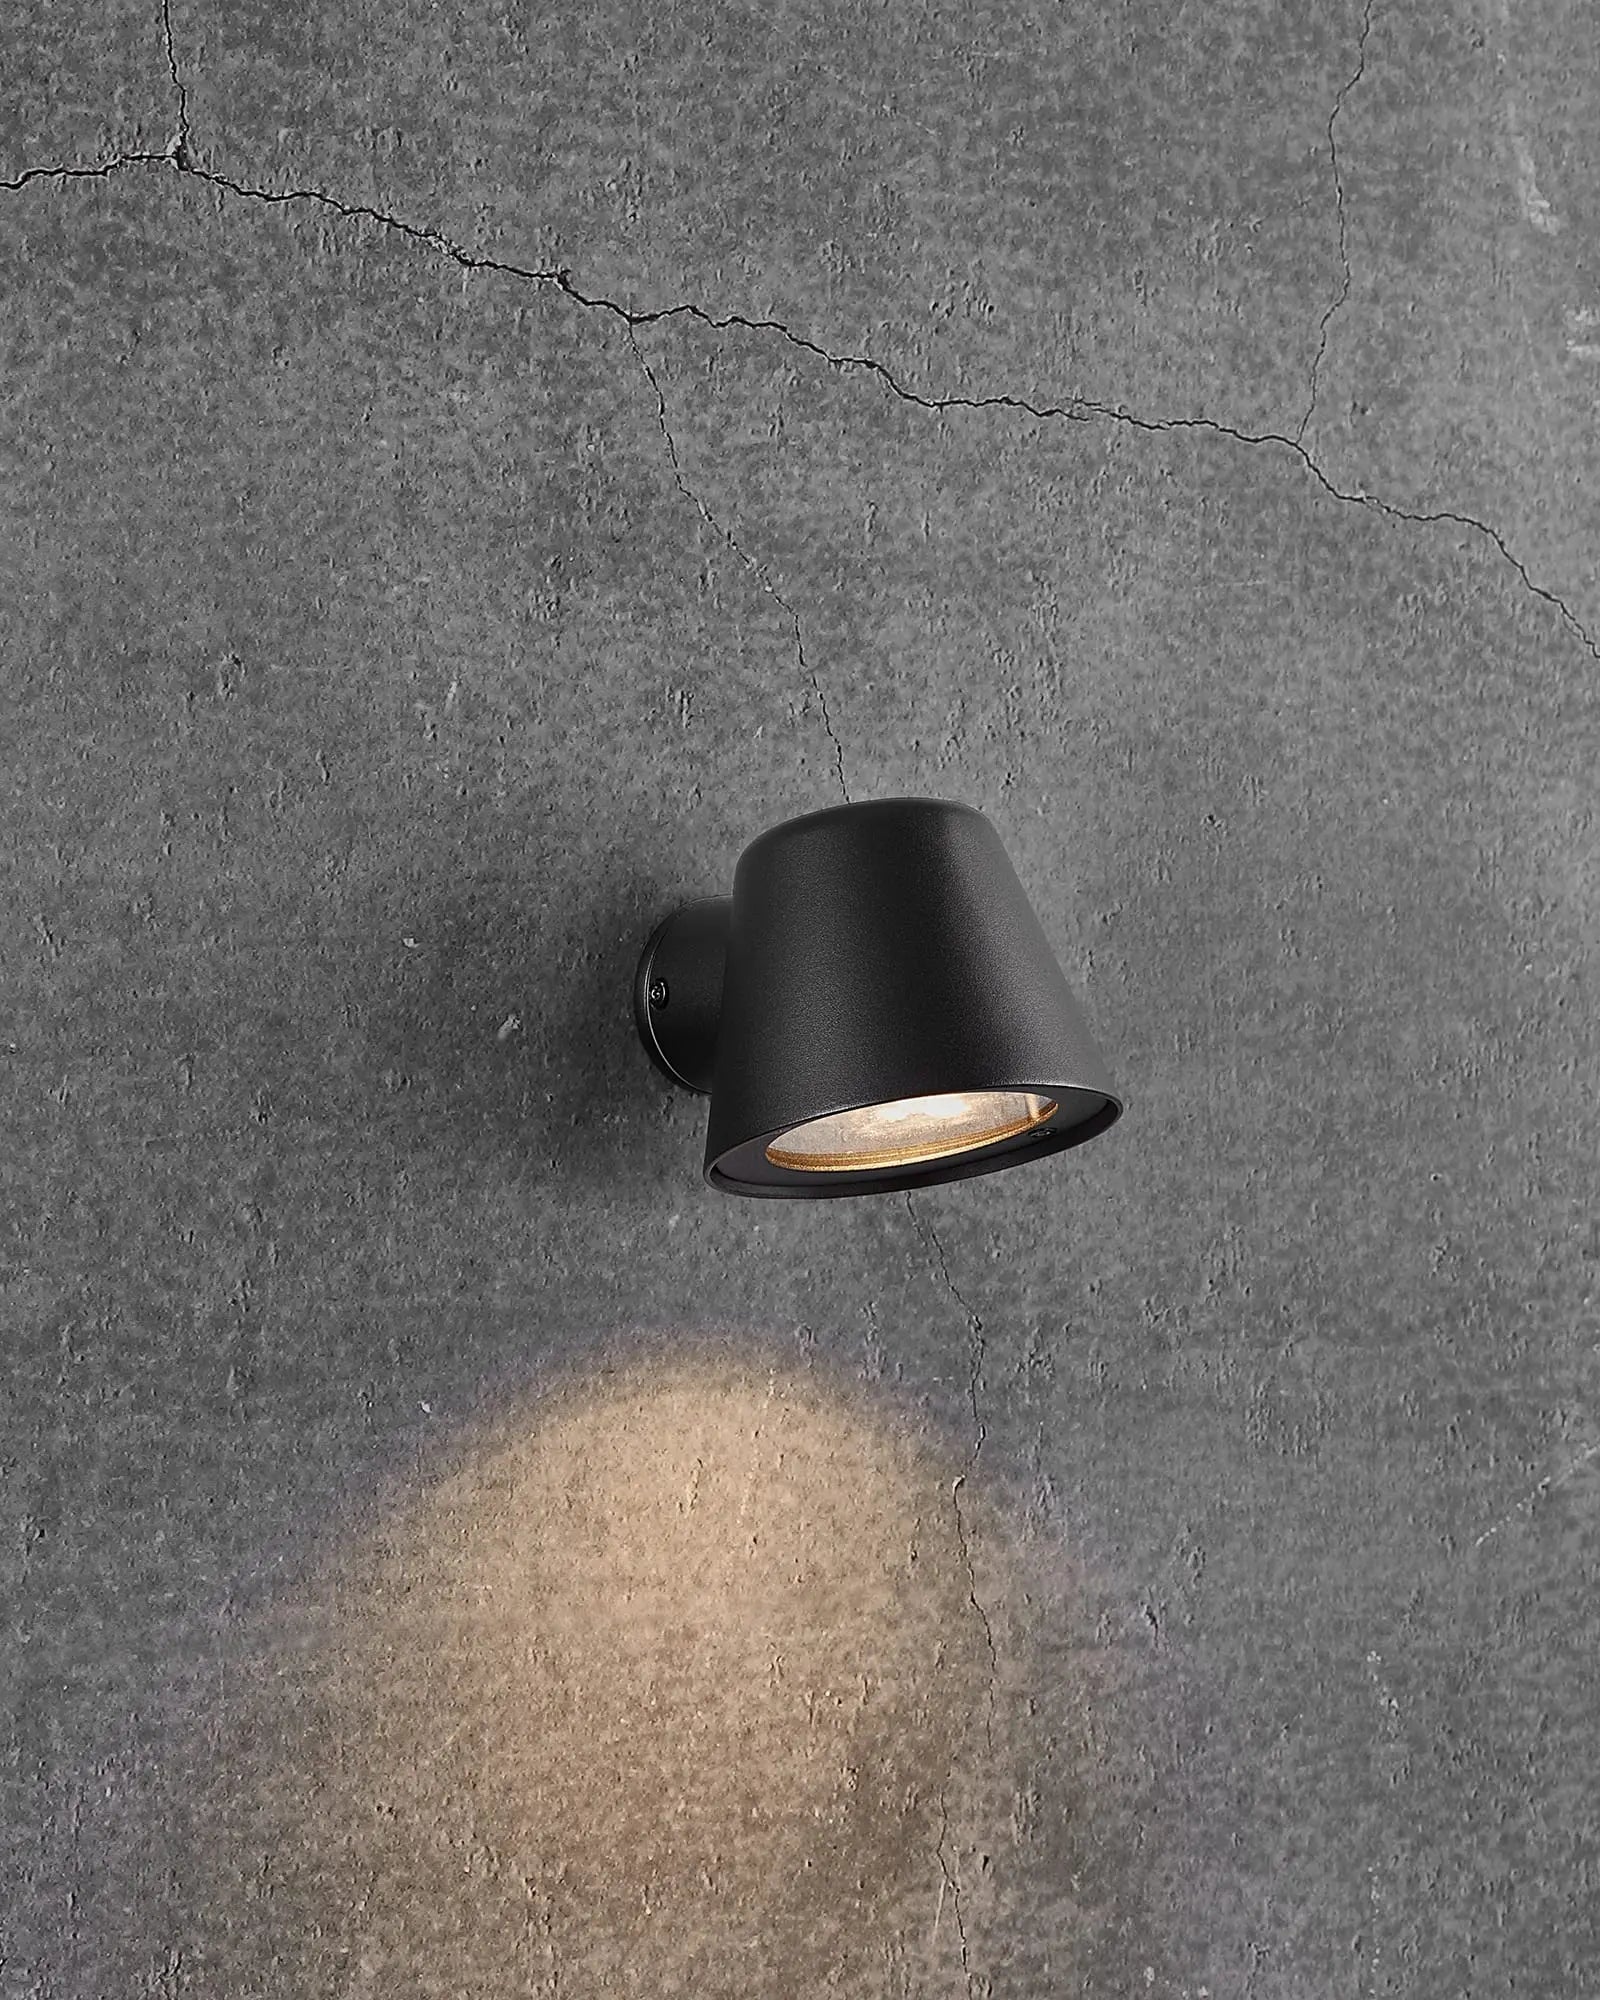 Aleria minimalistic Scandinavian Outdoor wall light on concrete wall in black